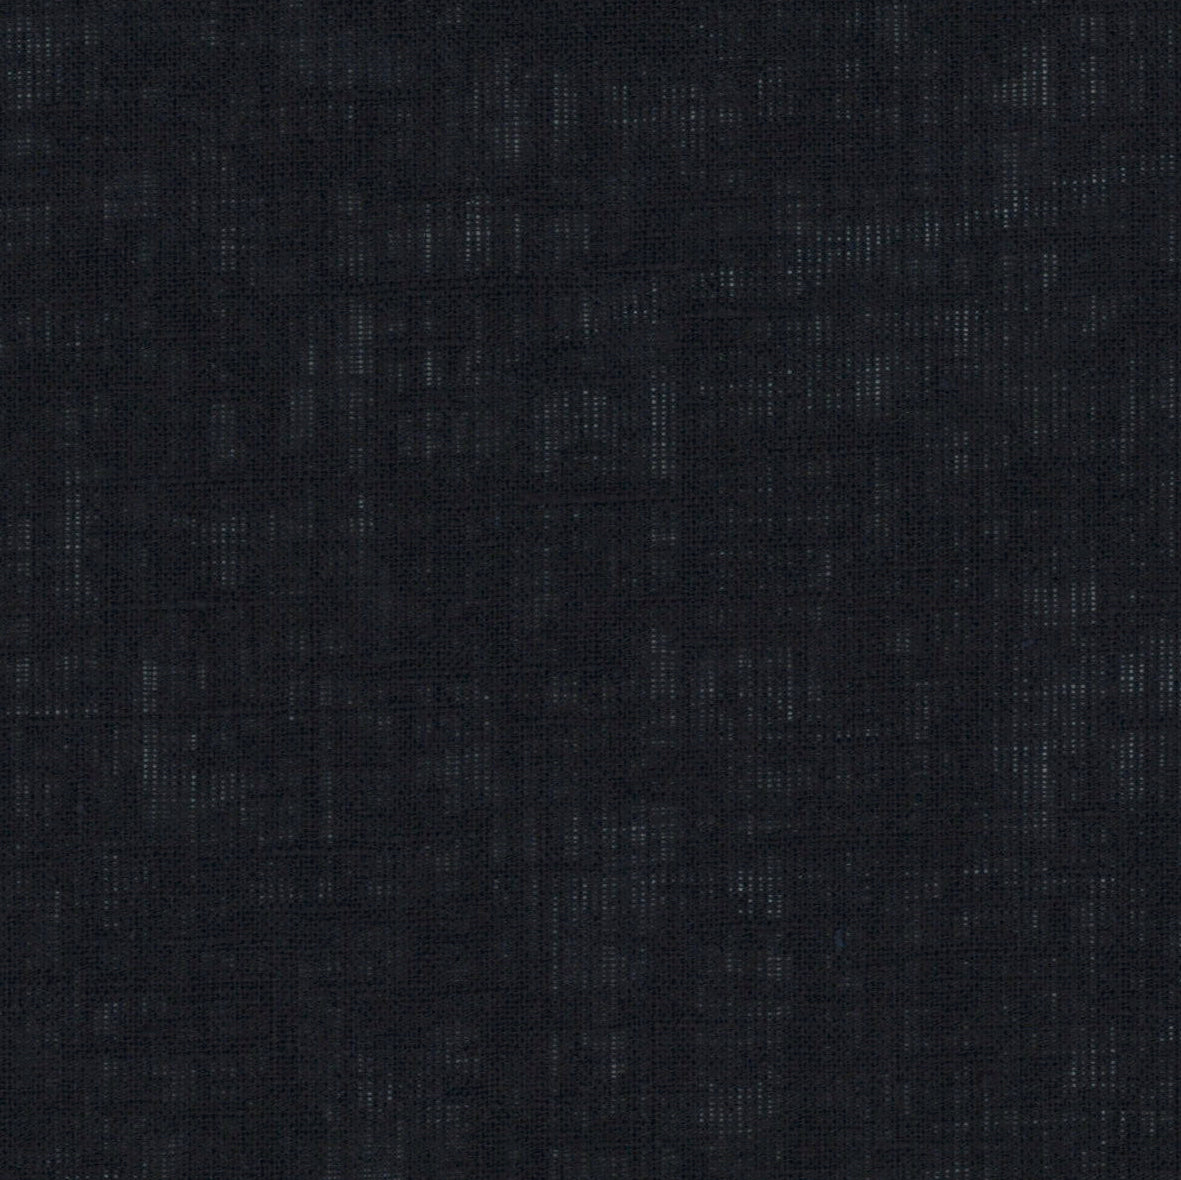 36011-03 Navy Linen Plain Dyed Blend 180g.yd 53" blend blue linen plain dyed polyester woven Solid Color - knit fabric - woven fabric - fabric company - fabric wholesale - fabric b2b - fabric factory - high quality fabric - hong kong fabric - fabric hk - acetate fabric - cotton fabric - linen fabric - metallic fabric - nylon fabric - polyester fabric - spandex fabric - chun wing hing - cwh hk - fabric worldwide ship - 針織布 - 梳織布 - 布料公司- 布料批發 - 香港布料 - 秦榮興